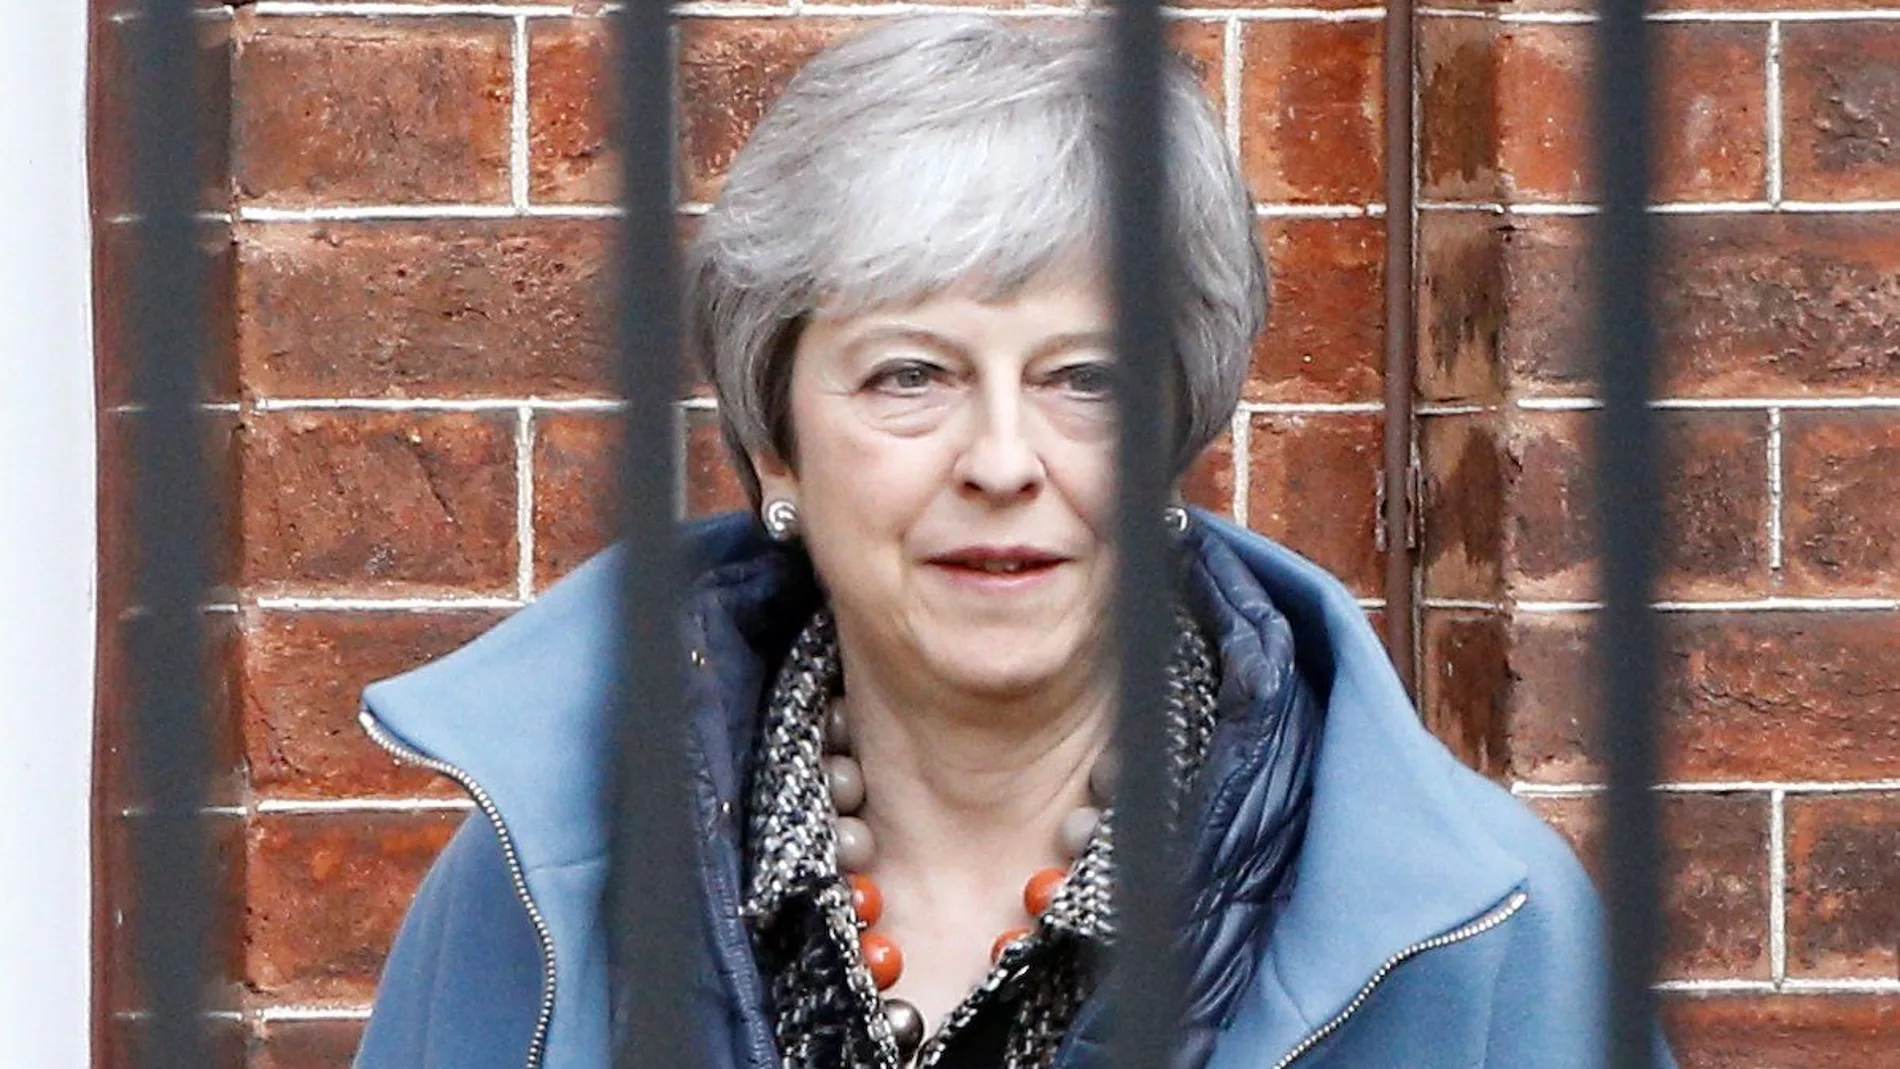 La primera ministra británica, Theresa May / Foto: Reuters